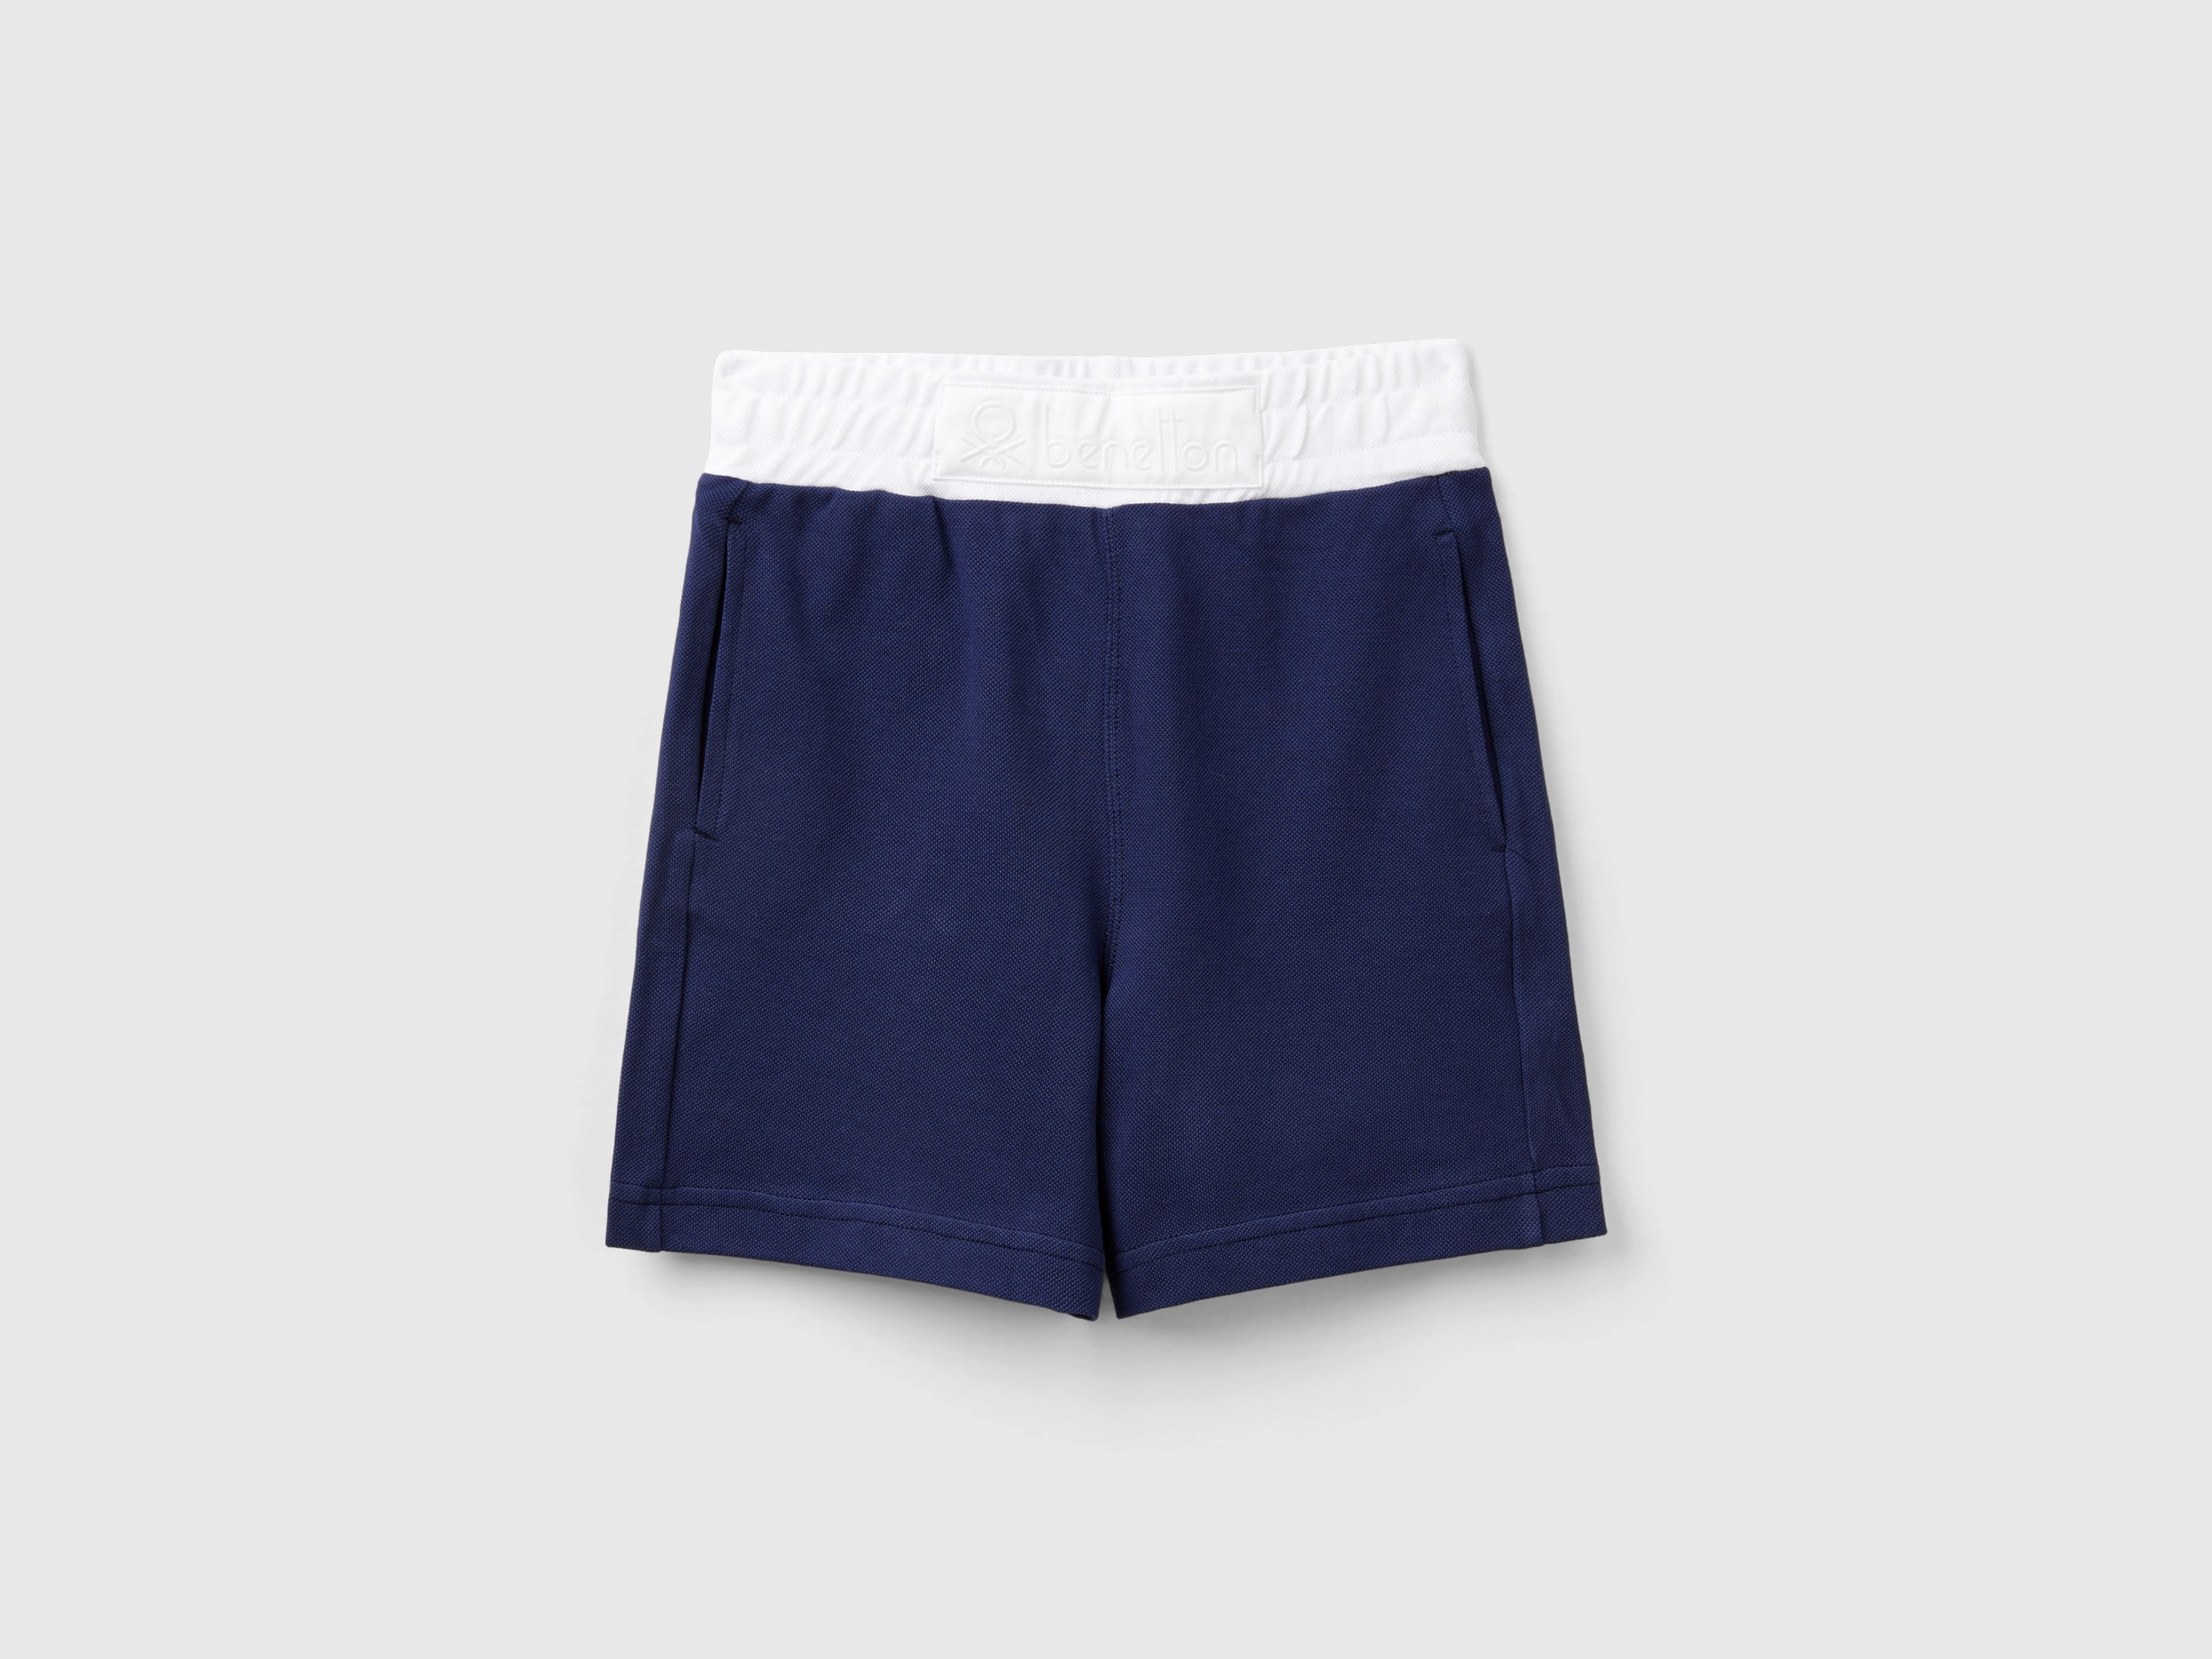 Image of Benetton, Organic Cotton Shorts, size 3XL, Dark Blue, Kids